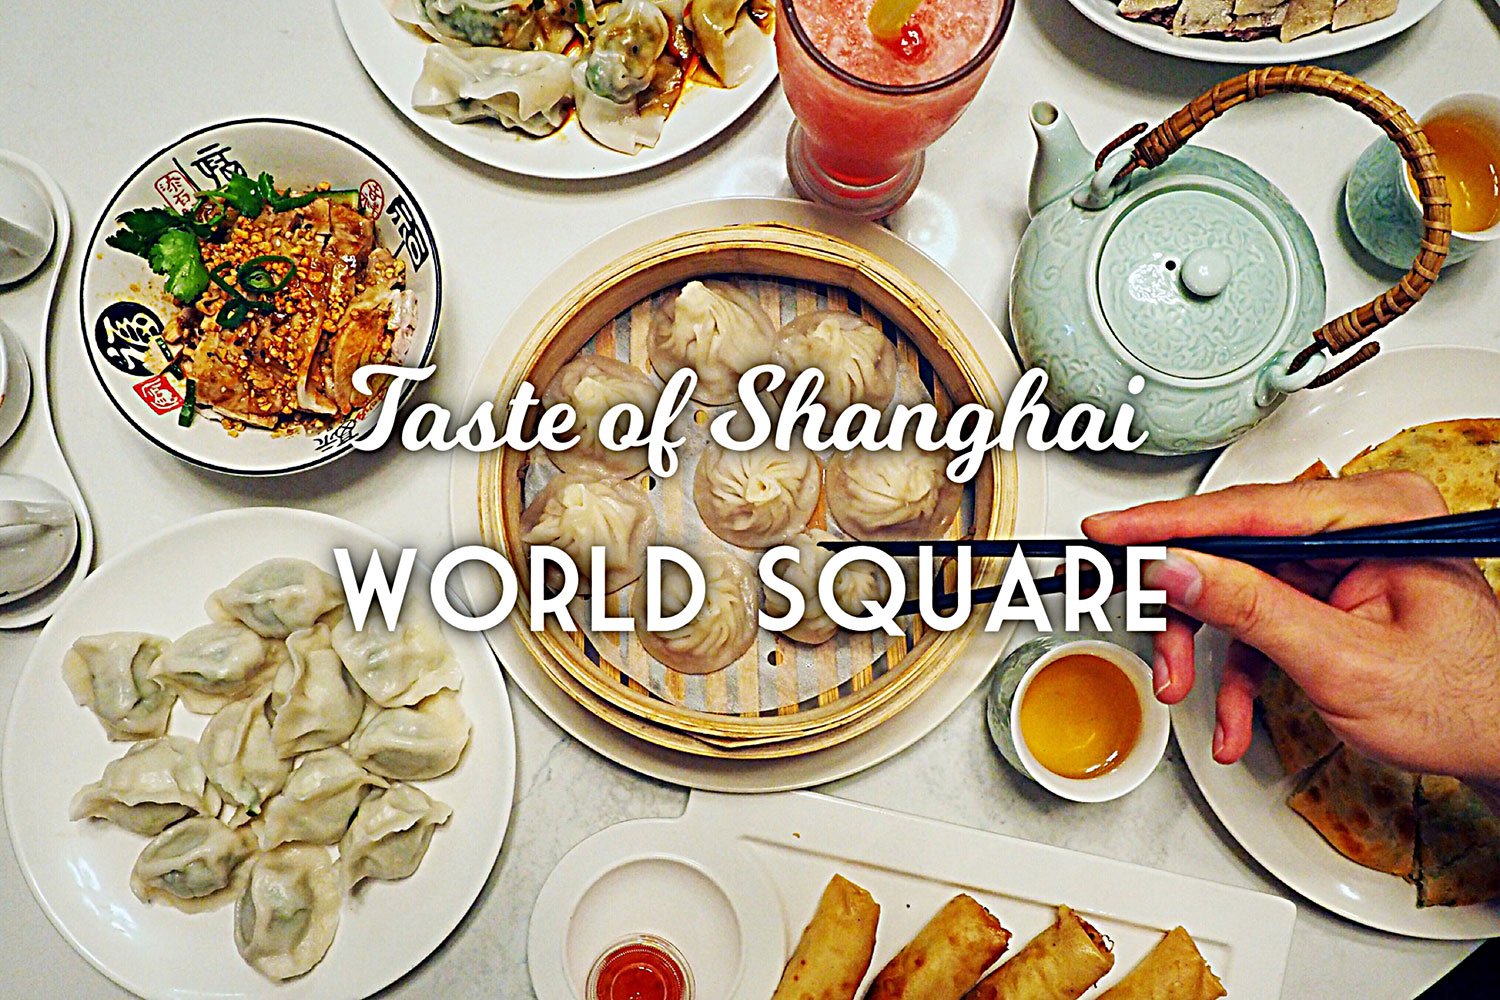 Sydney Food Blog Review of Taste of Shanghai, World Square